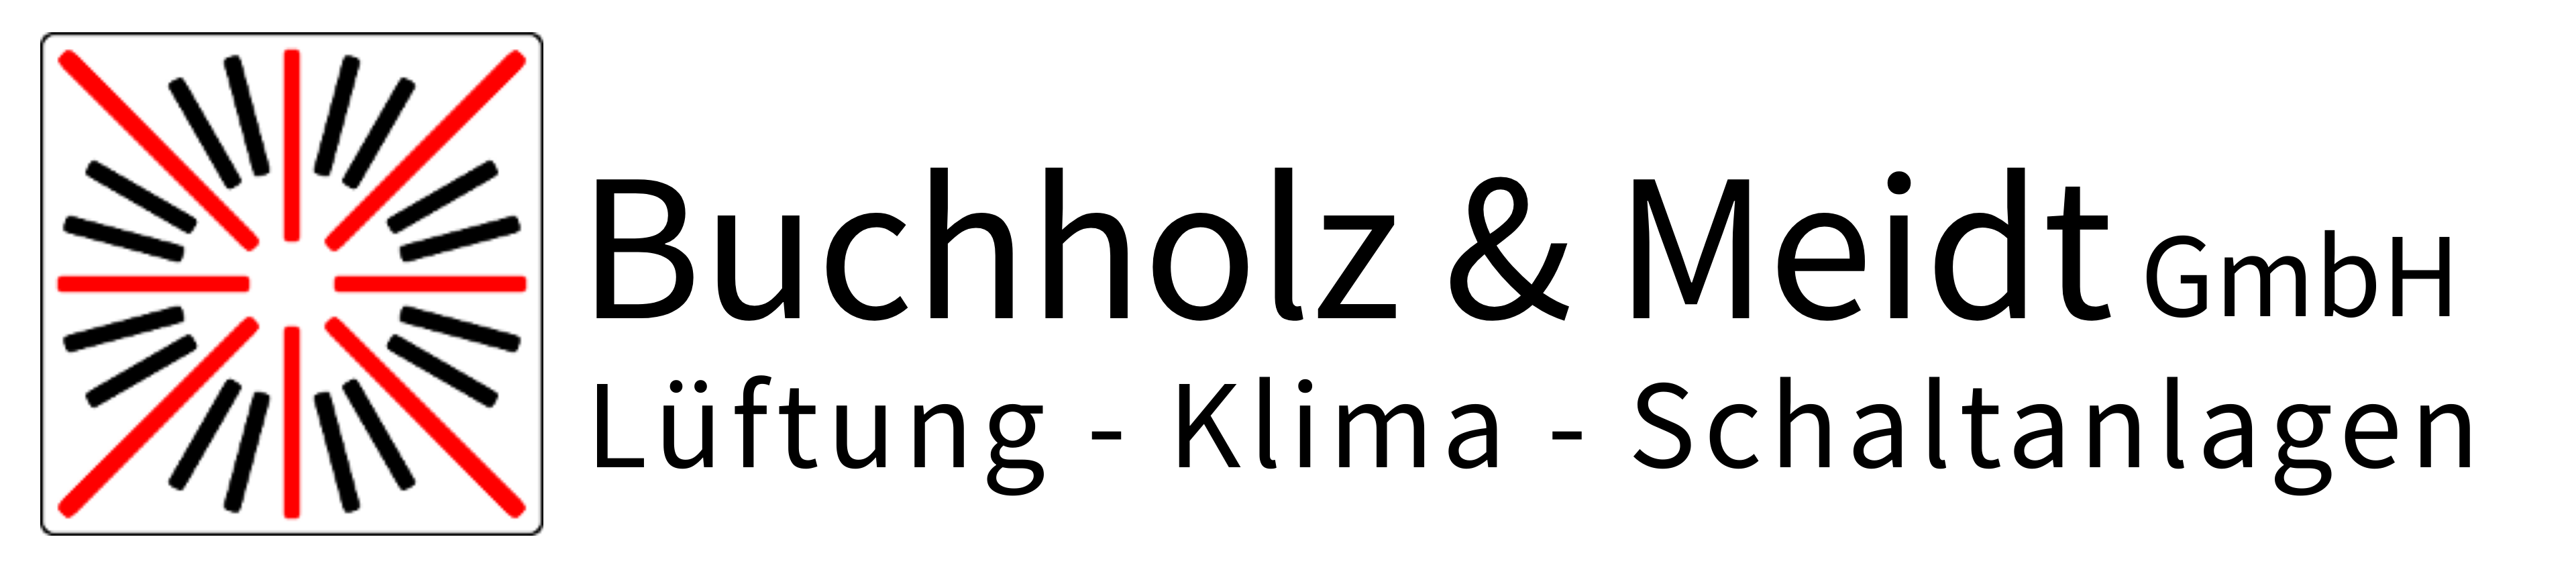 Buchholz & Meidt GmbH